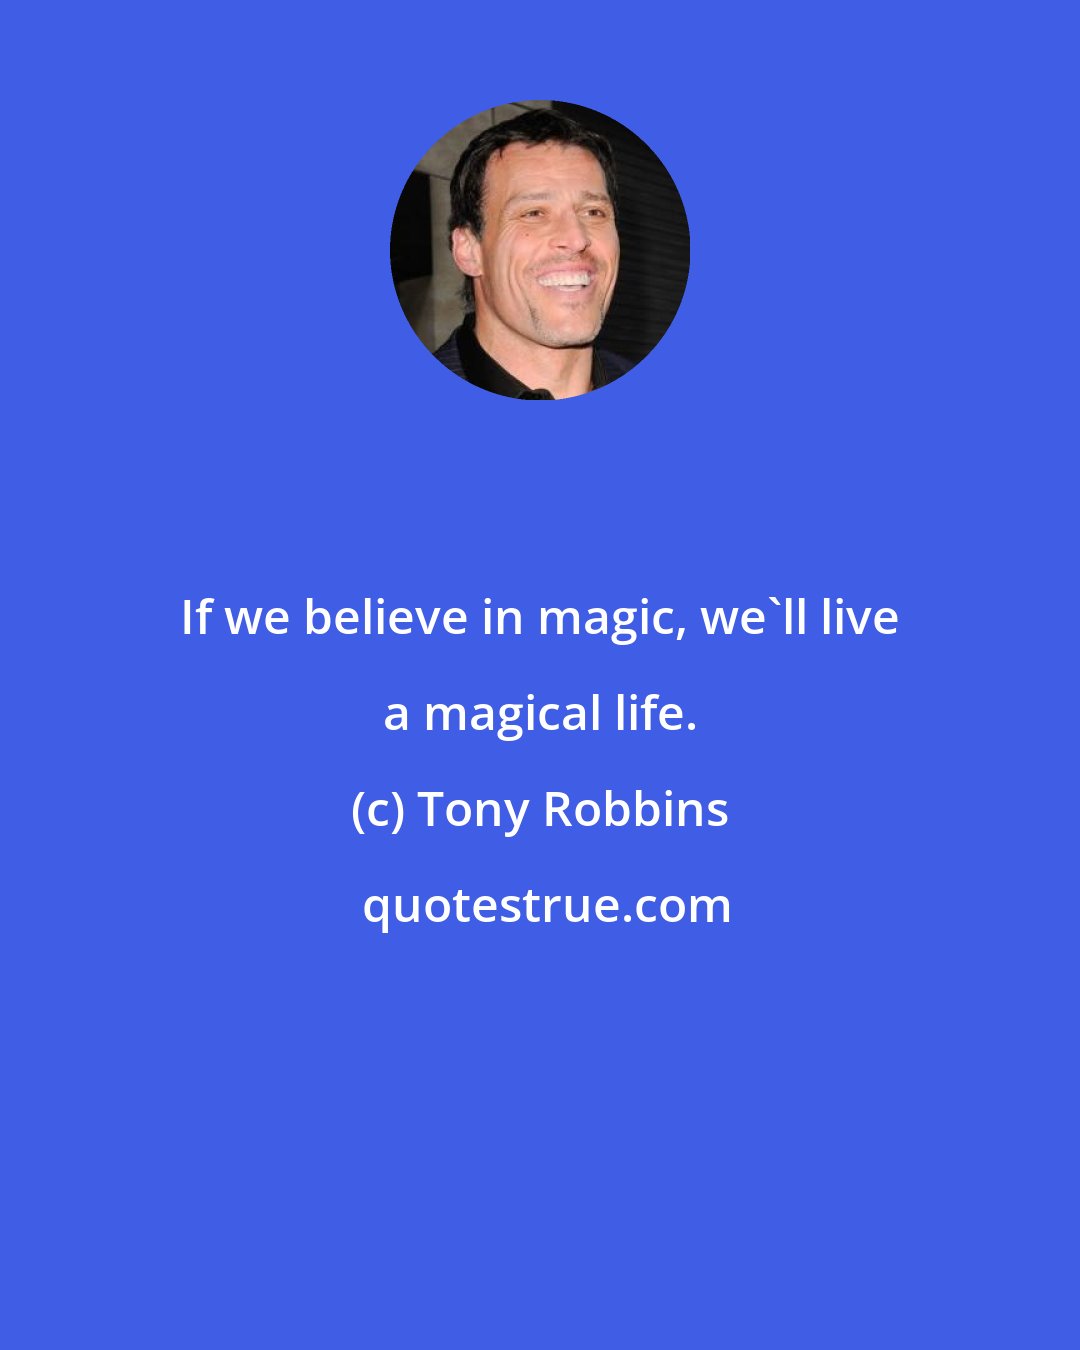 Tony Robbins: If we believe in magic, we'll live a magical life.